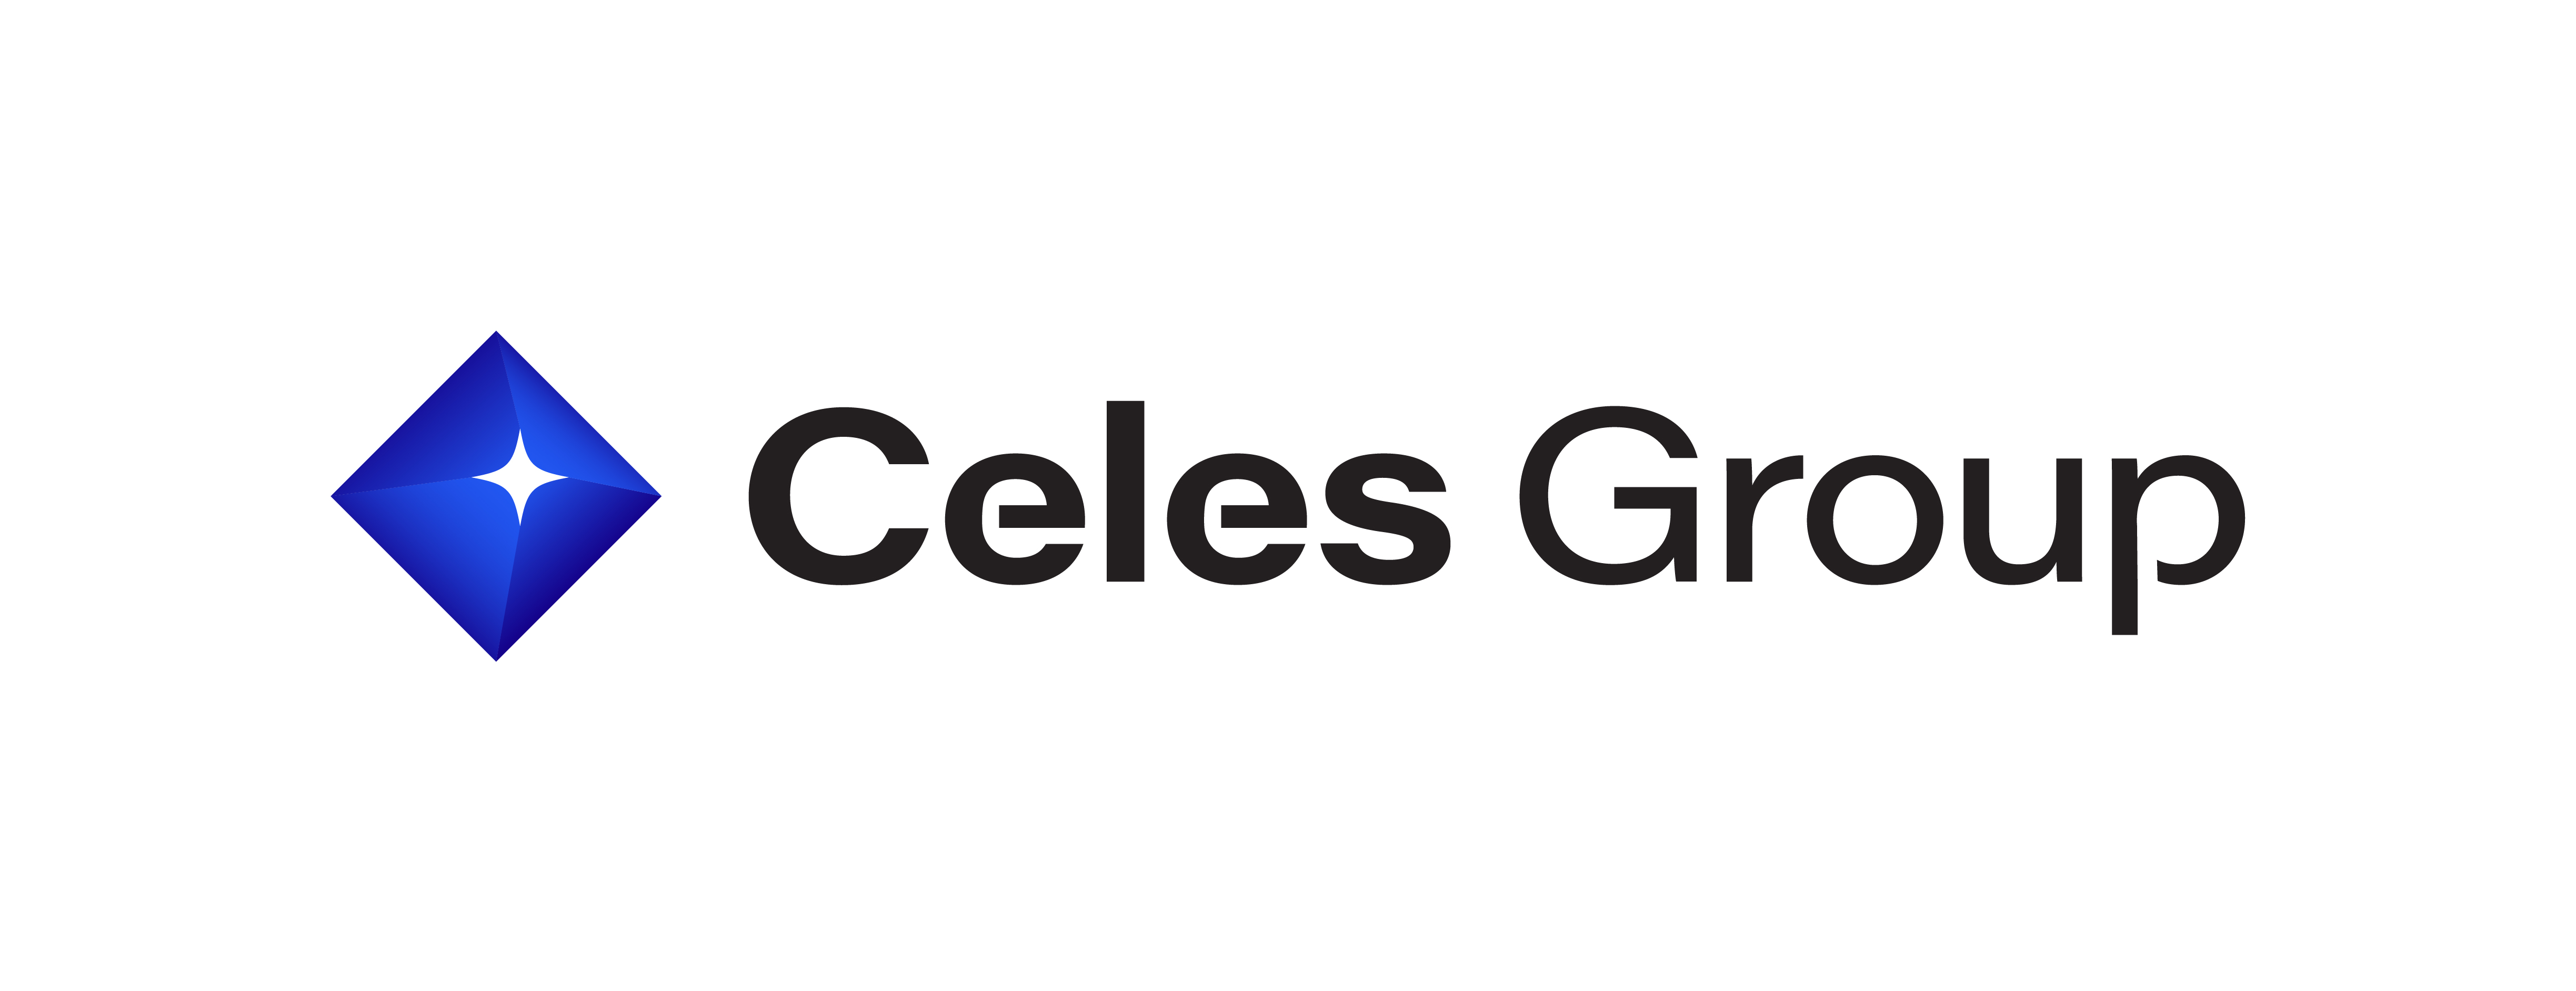 Celes Group